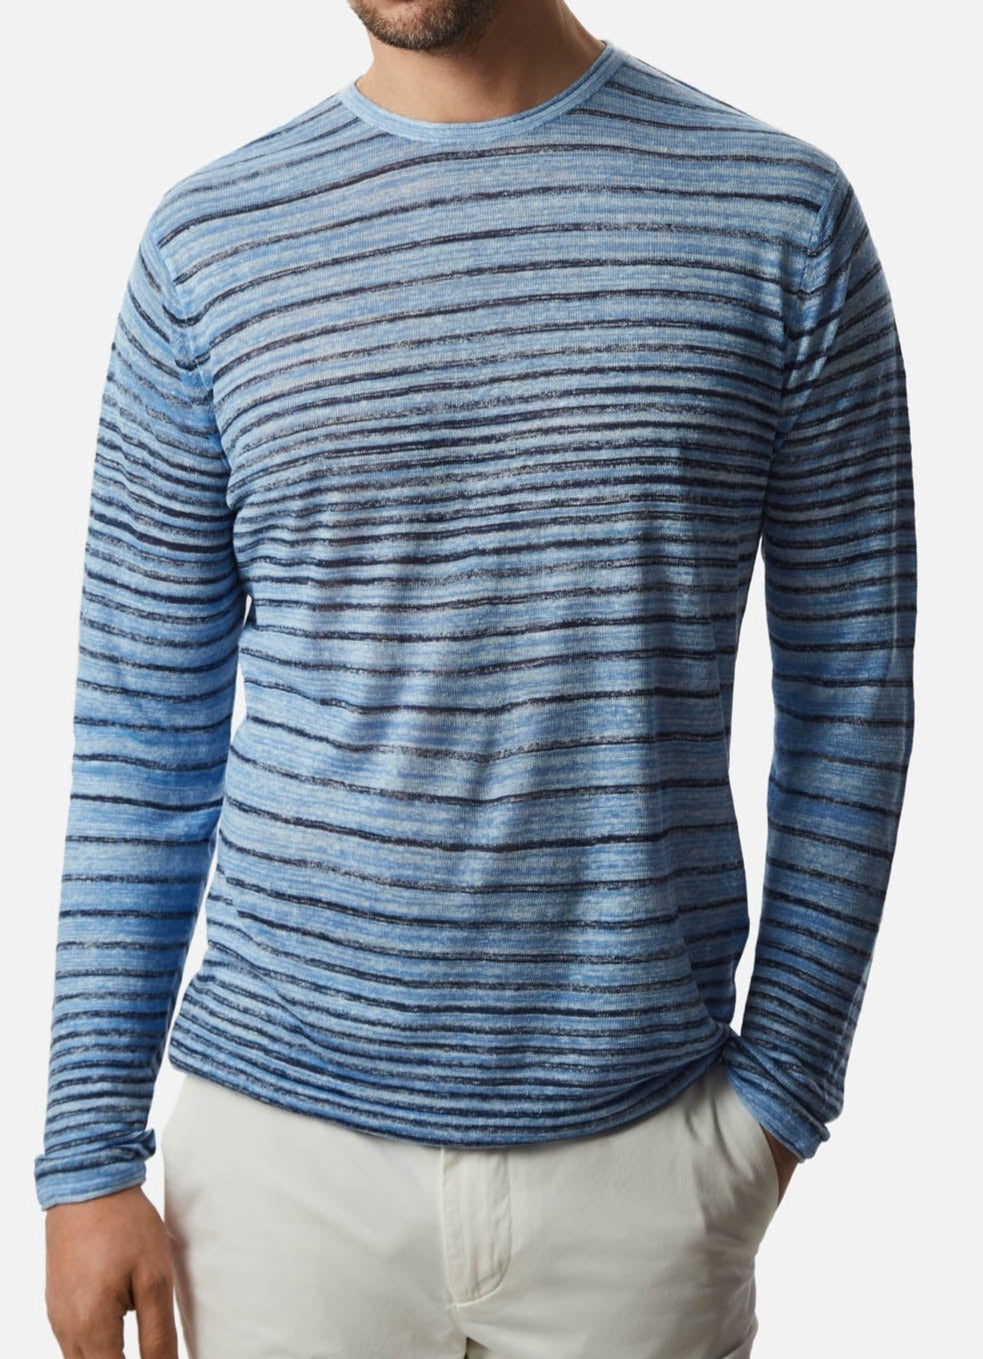 Men Jersey | Sky Blue/White Striped Linen Sweater by Spanish designer Adolfo Dominguez